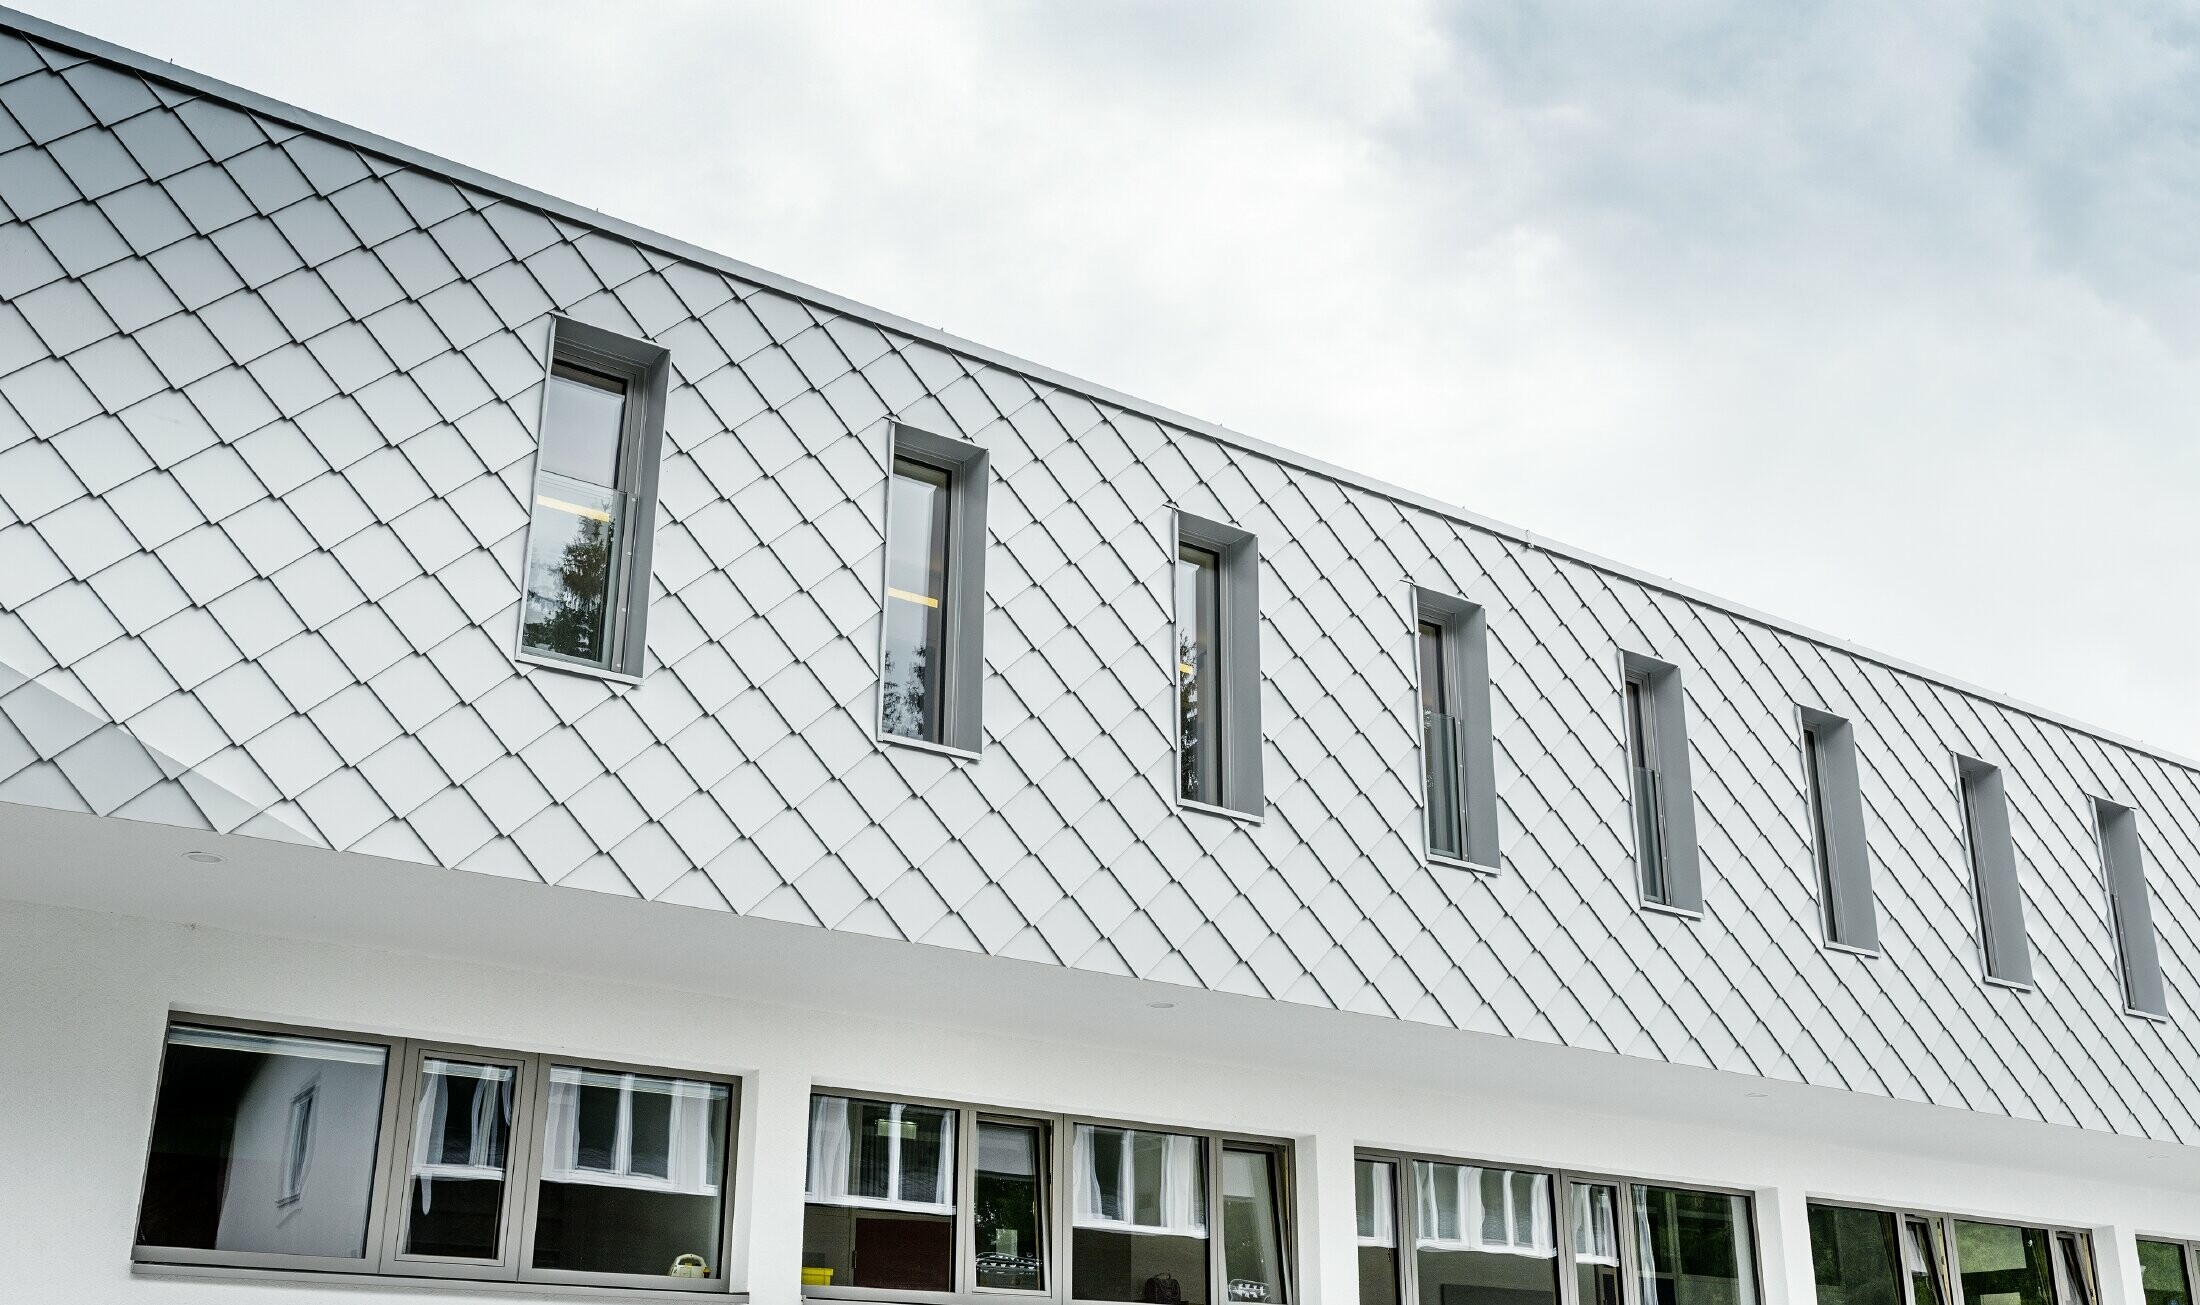 Newly built kindergarten in Kaprun with a modern aluminium façade with the PREFA rhomboid façade tile in PREFA white